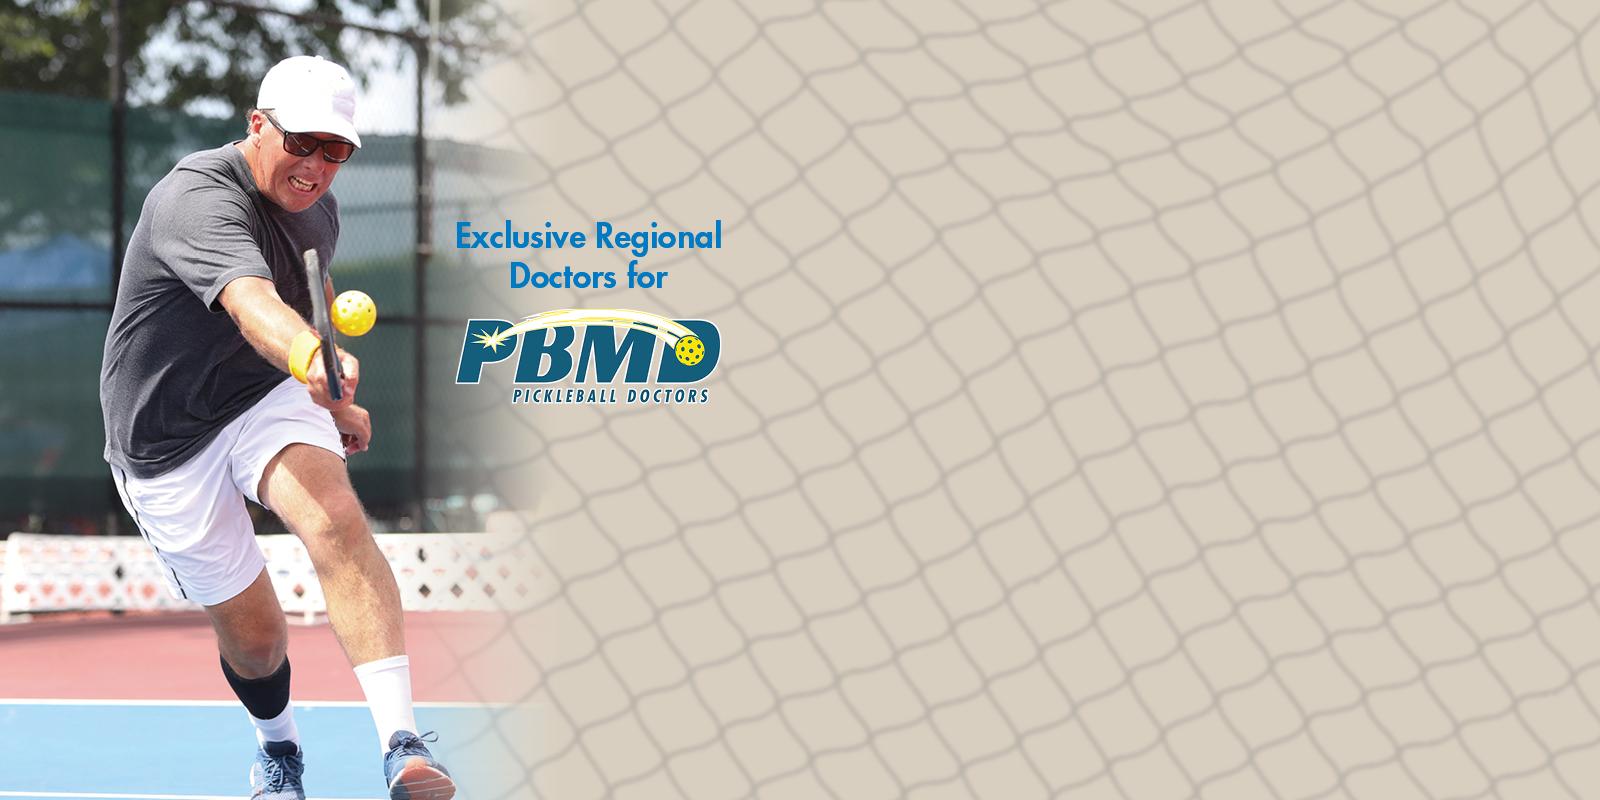 Exclusive Regional Doctors for PBMD